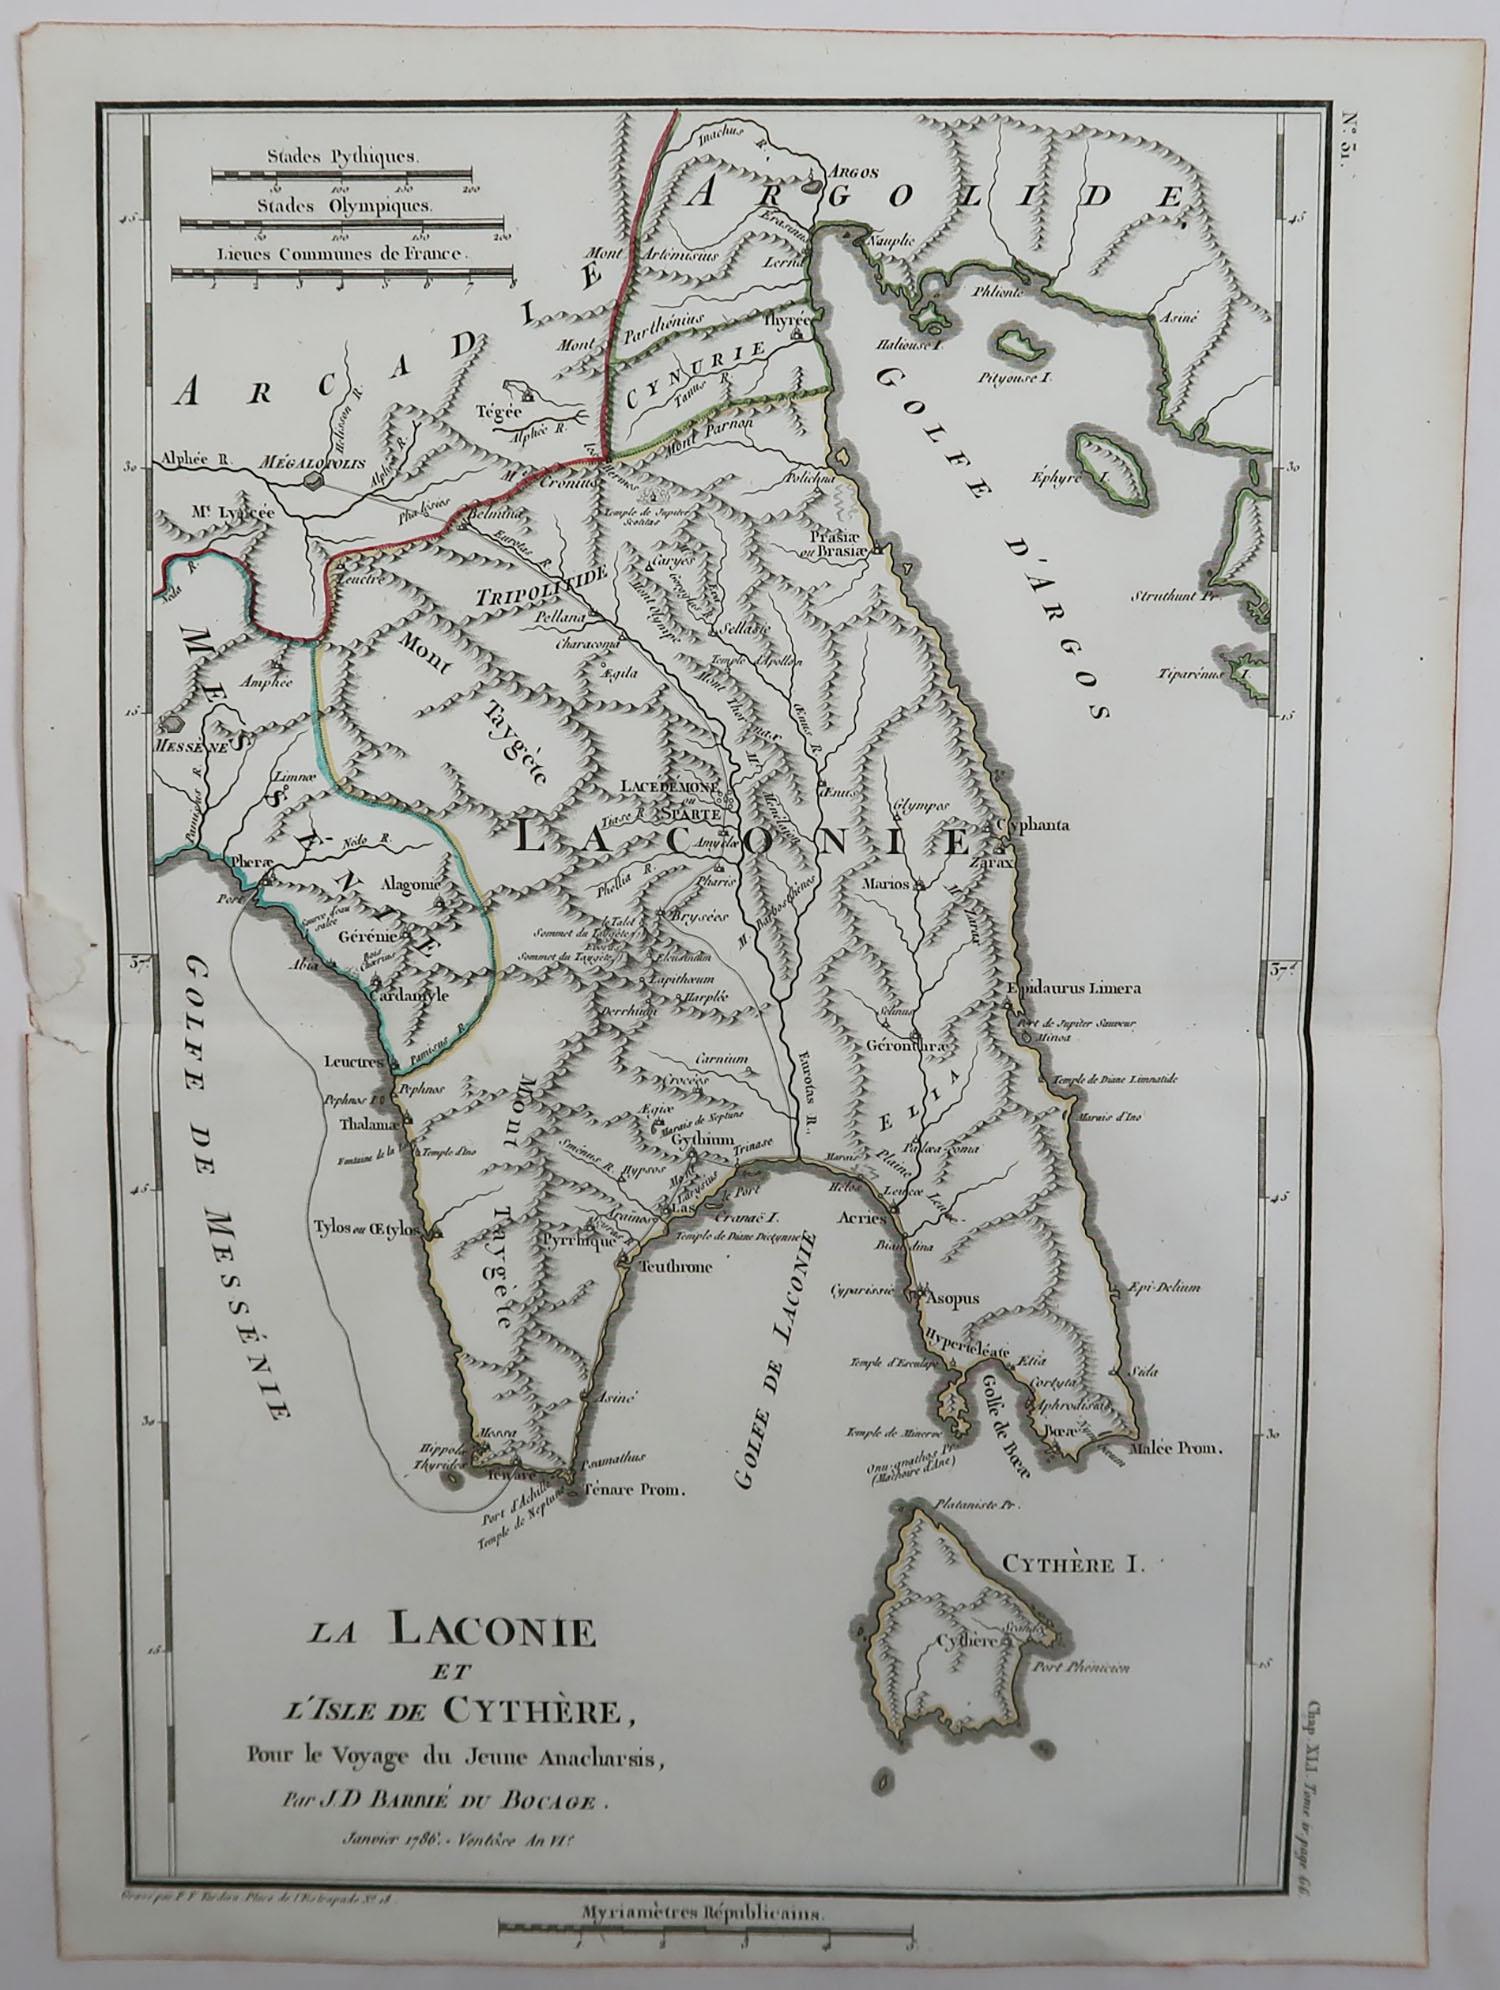 laconia greece map